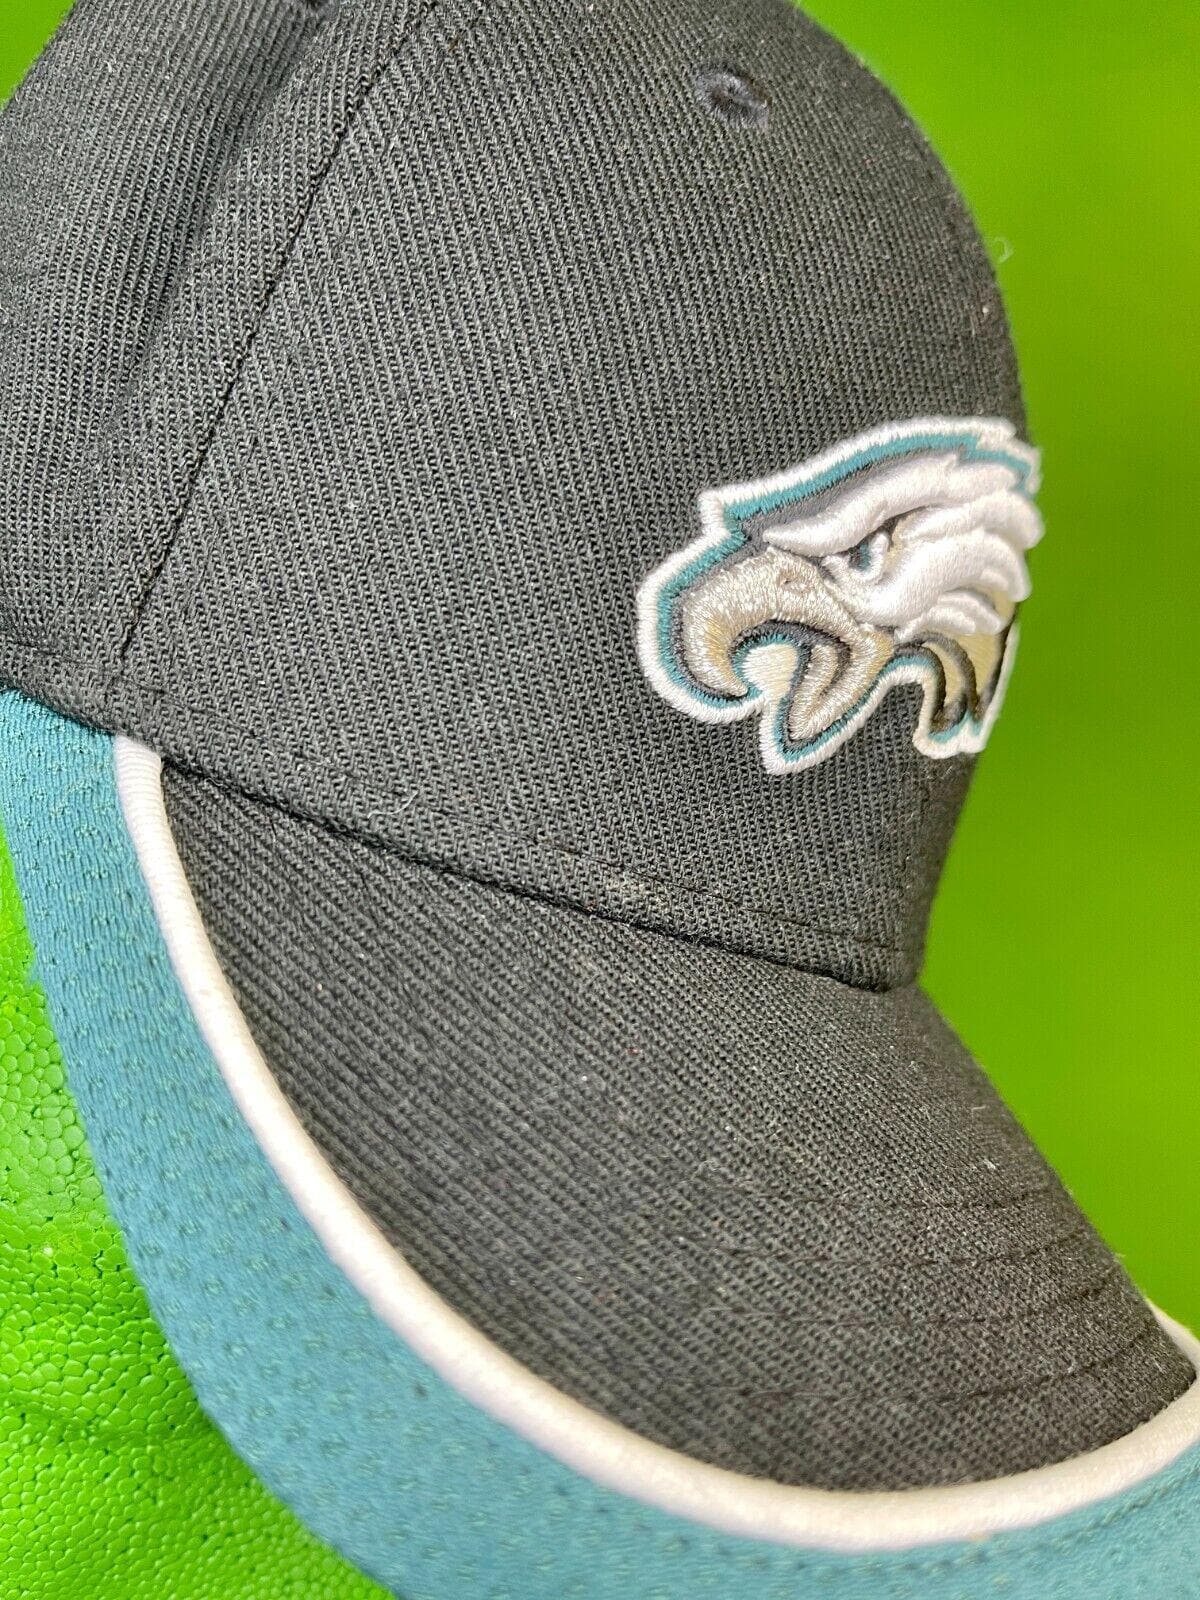 NFL Philadelphia Eagles New Era Hat/Cap Toddler/youth X-Small